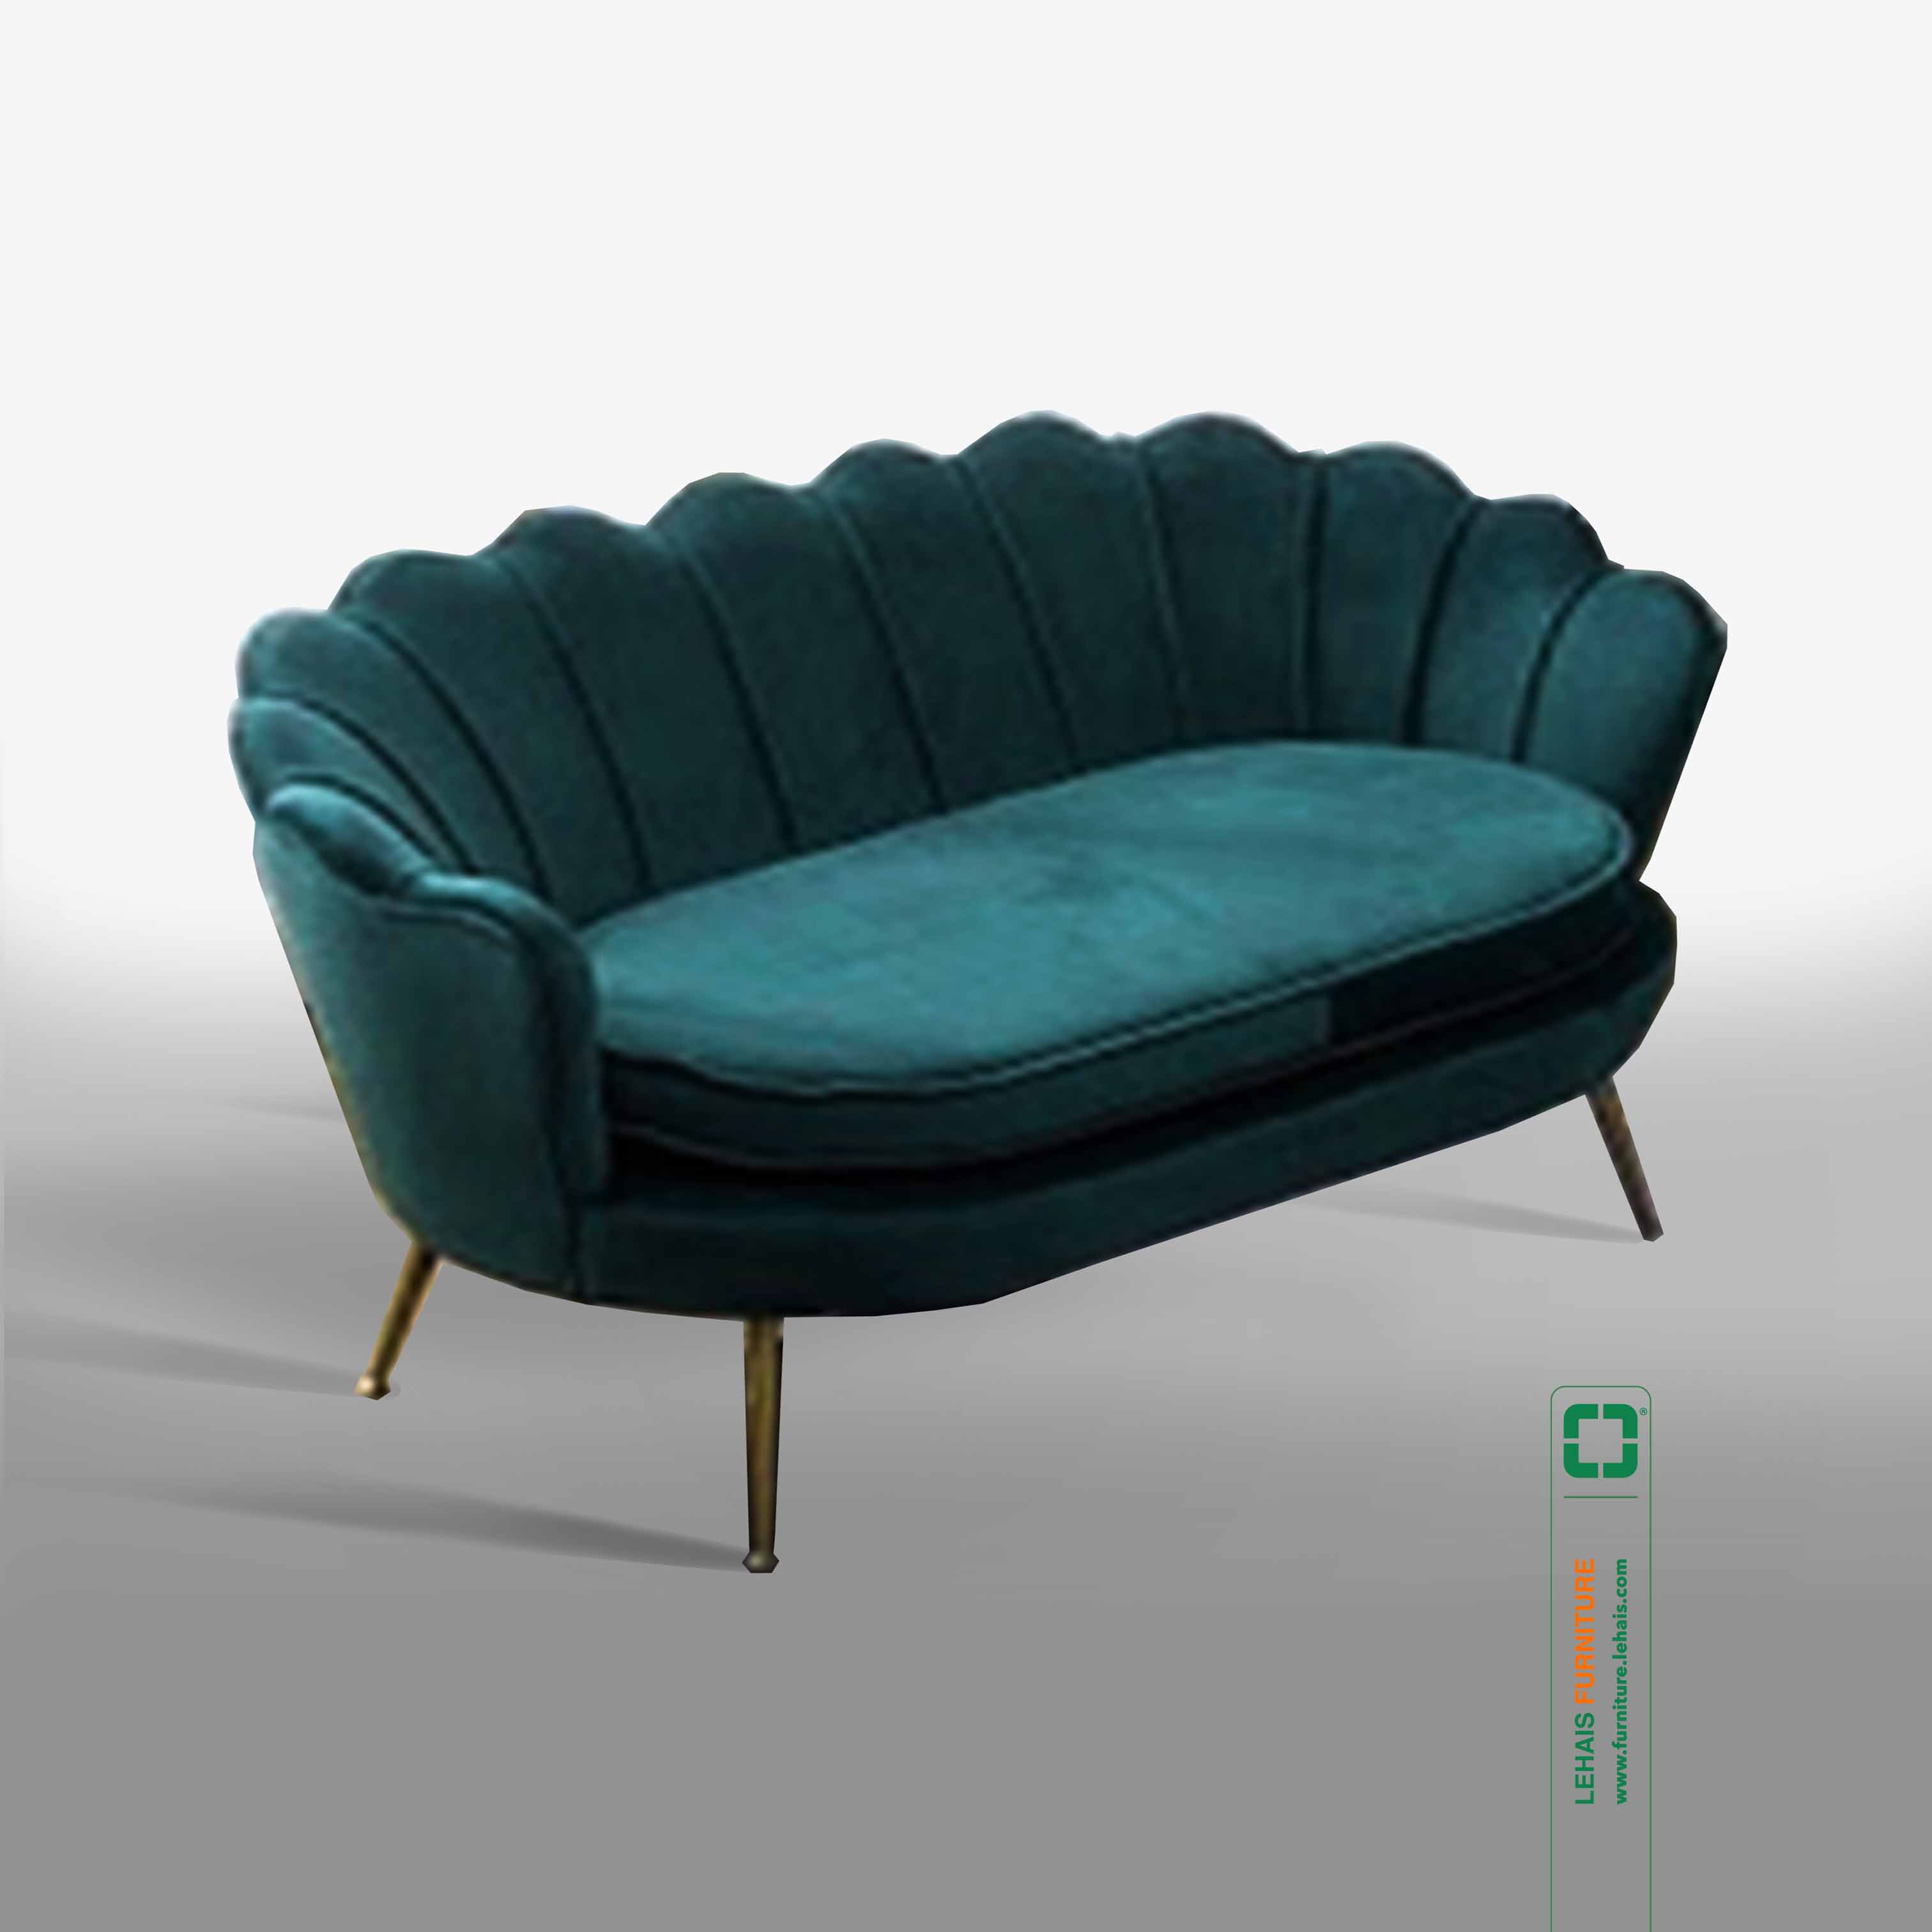 Chair sofa Shell Sgaped - G42LHFU